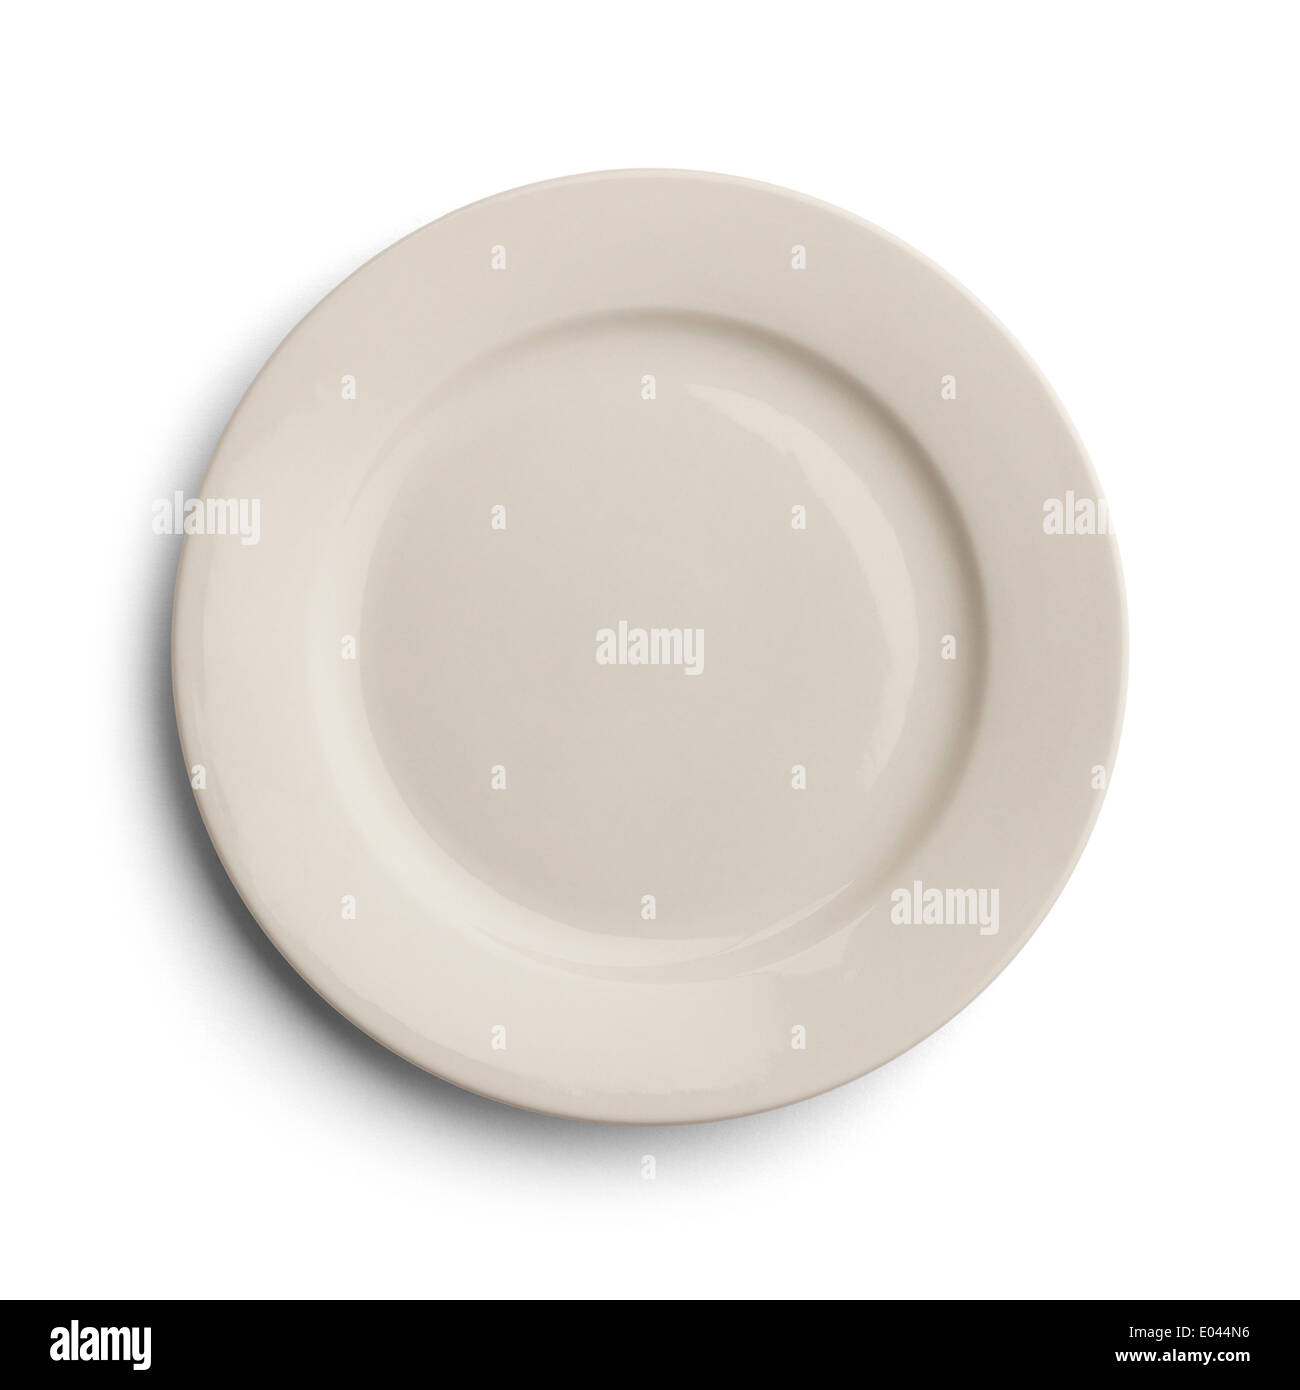 White Ceramic Dinner Plate Isolated on White Background. Stock Photo